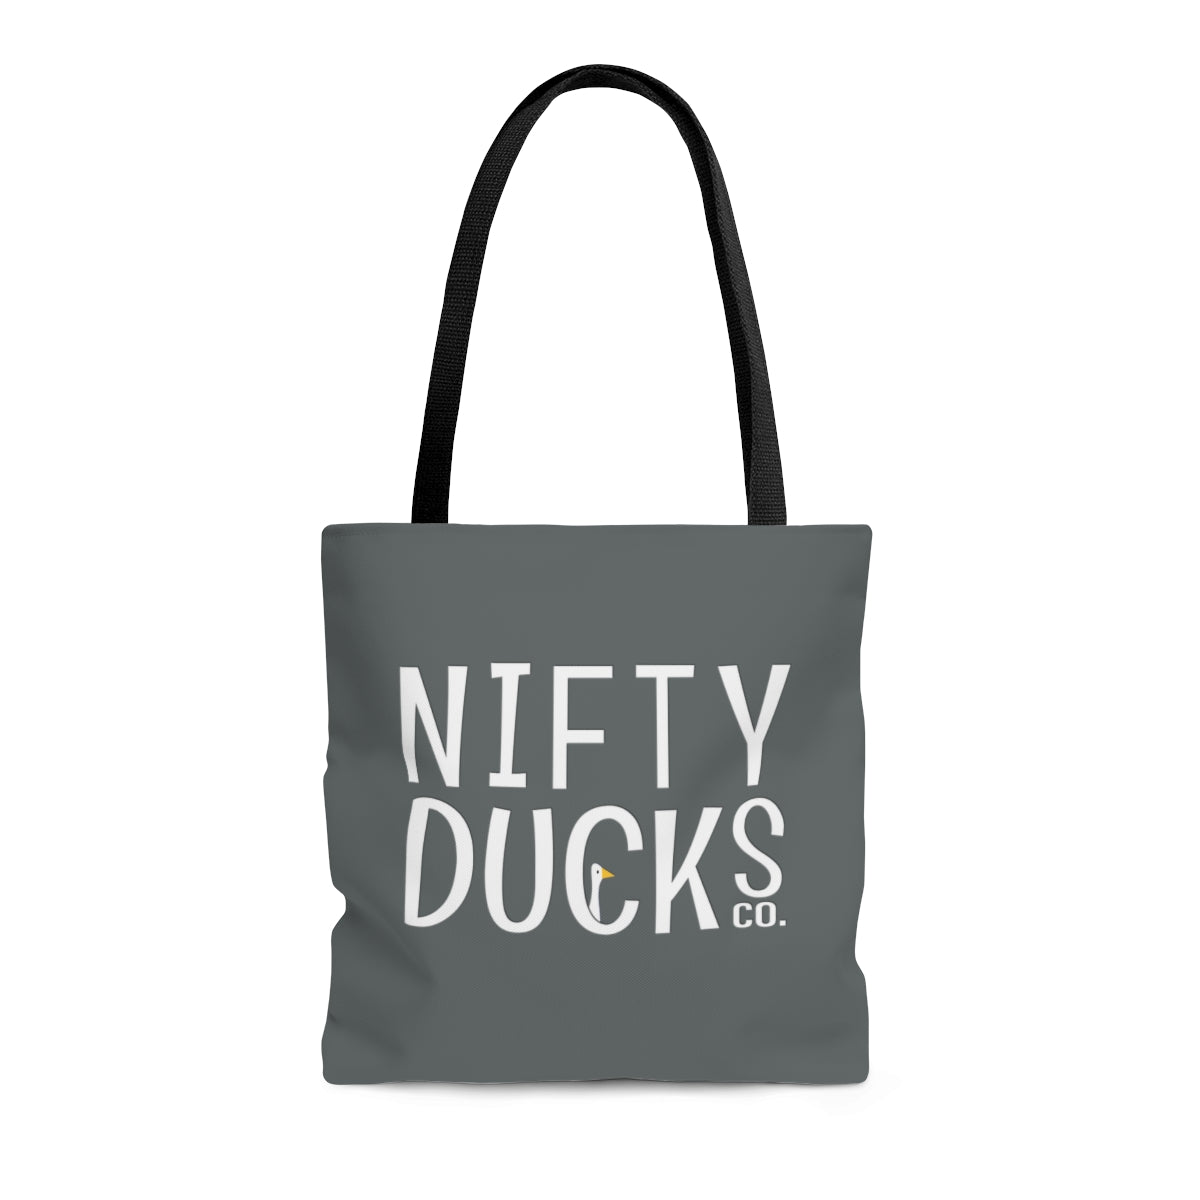 Nifty Ducks Co. Logo2 - white on gray - Tote Bag